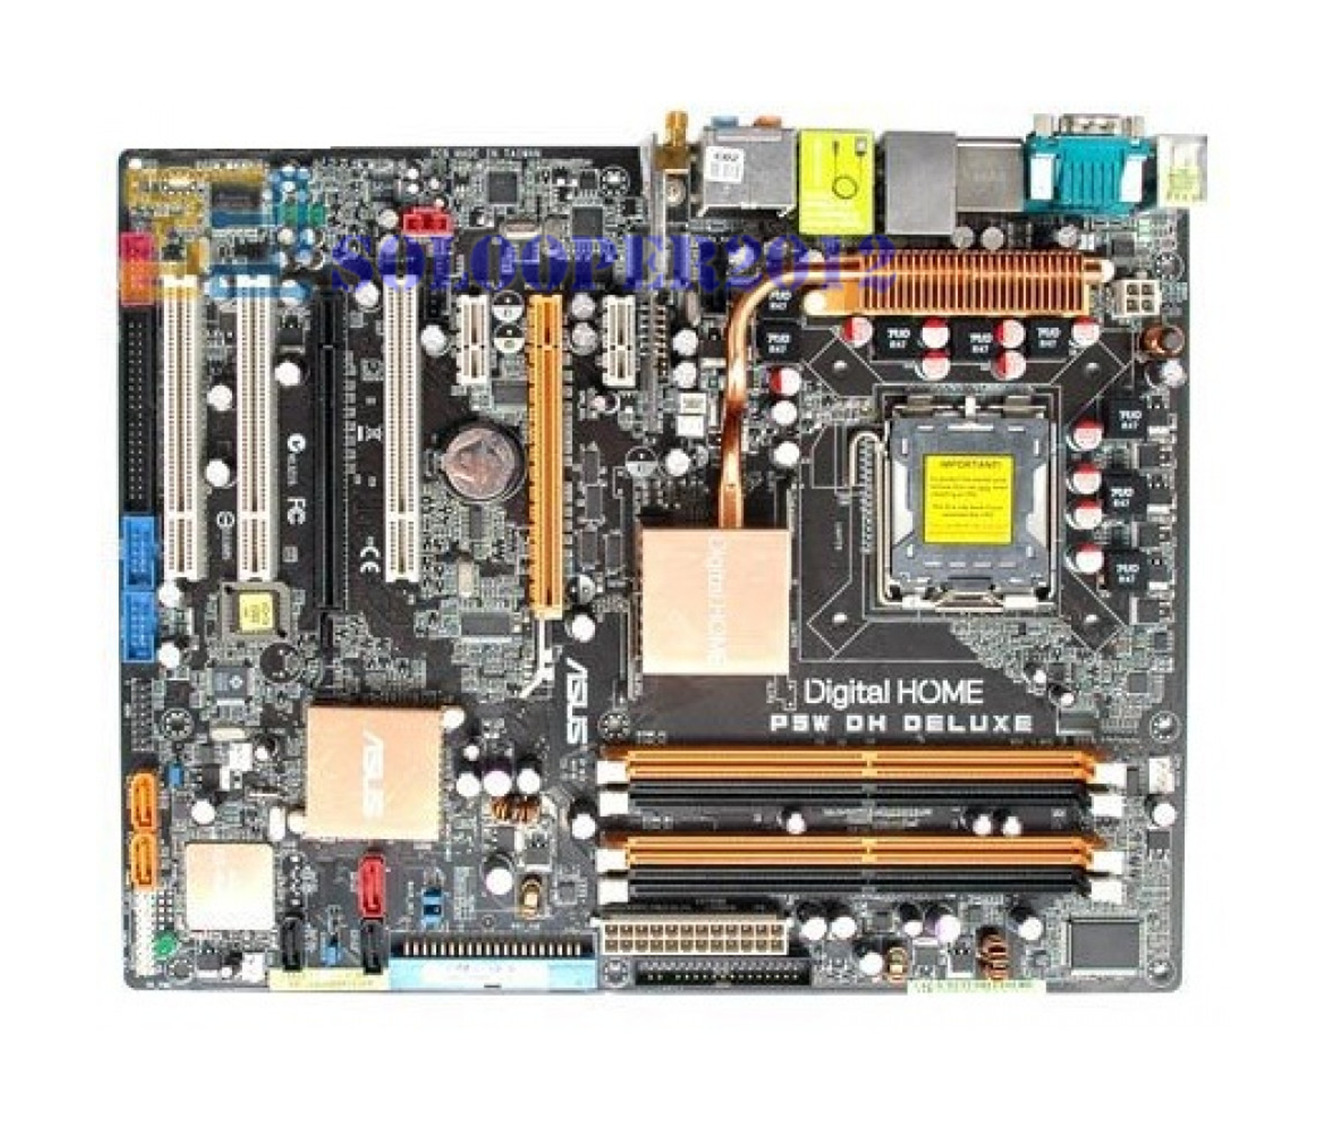 ASUS P5W DH Deluxe LGA 775 Intel 975X DDR2 DIMM VGA Motherboard ATX